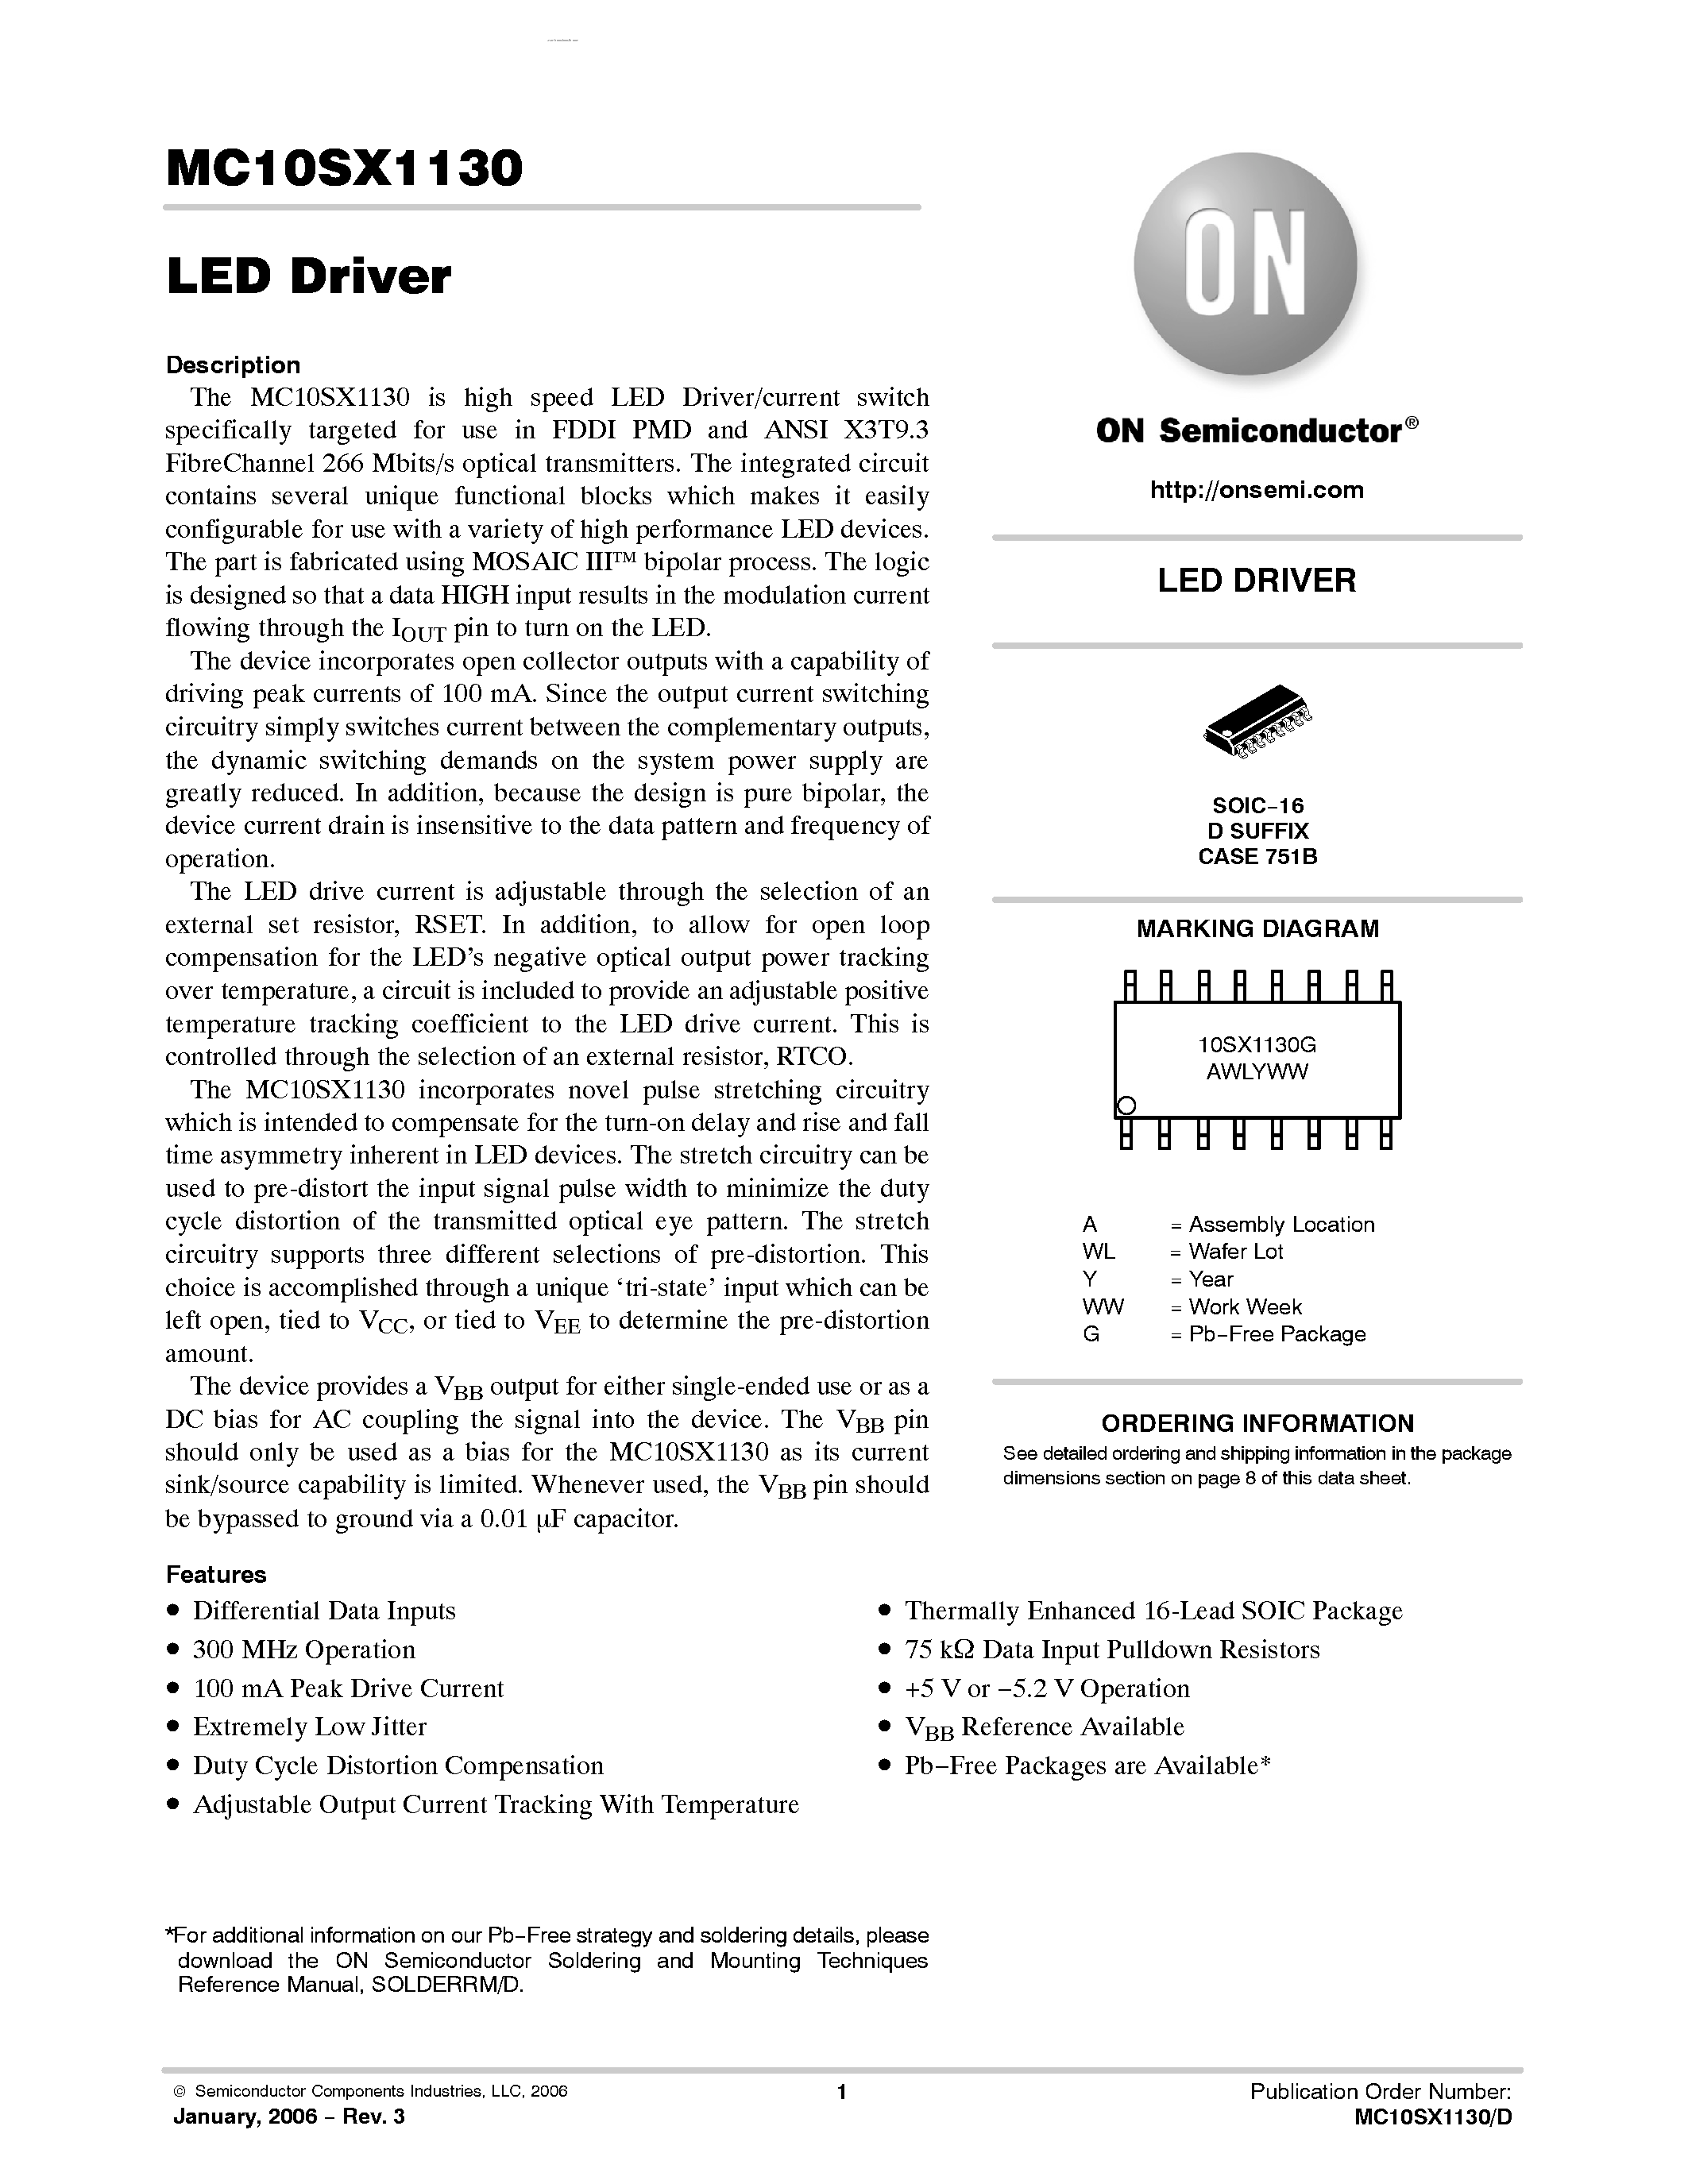 Datasheet MC10SX1130 - LED DRIVER page 1